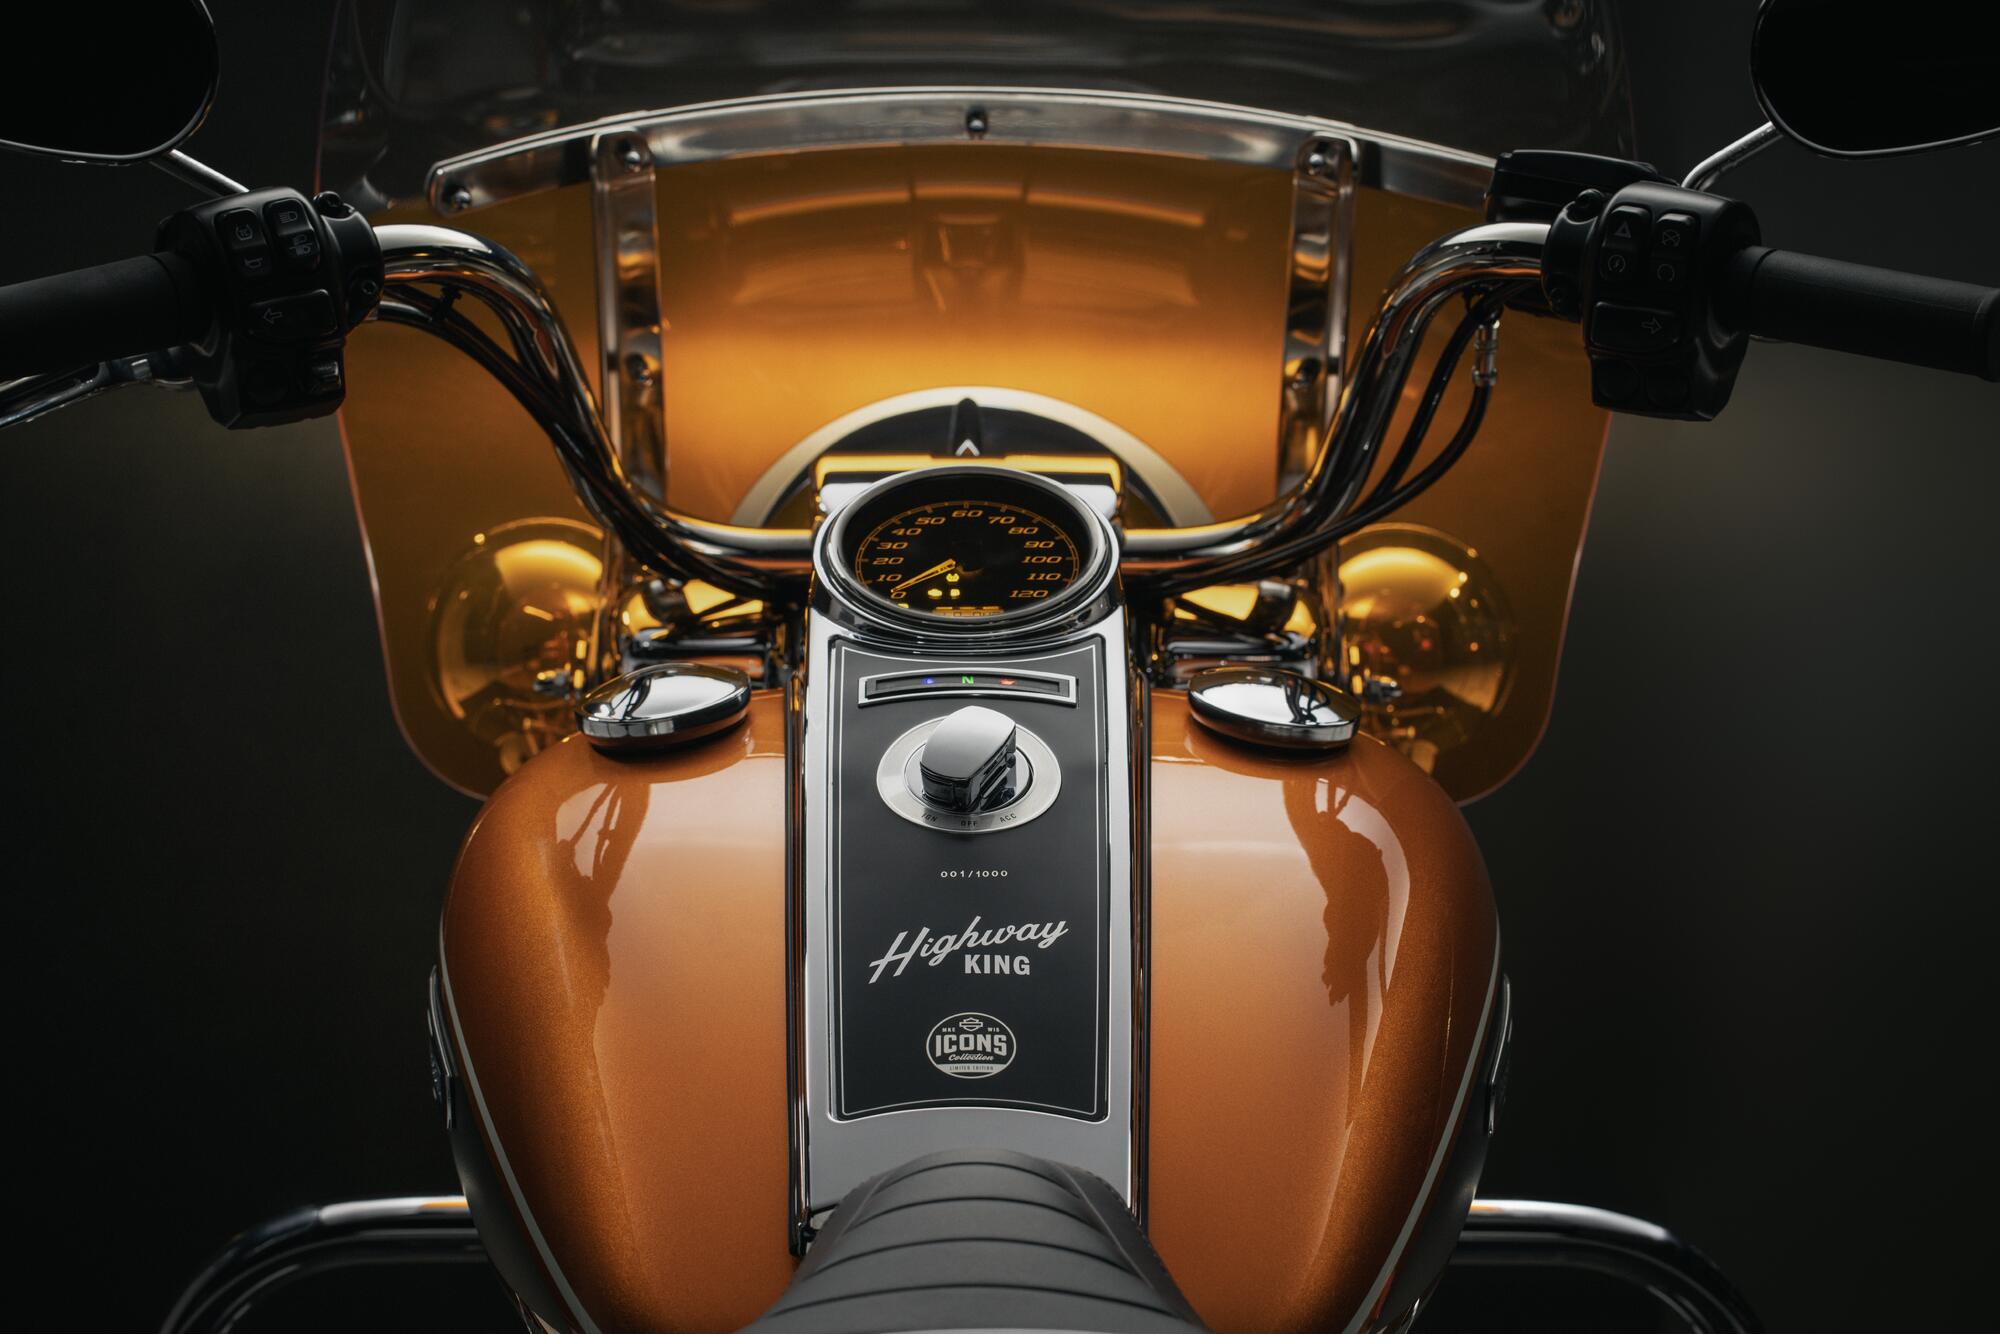 The new 2023 Harley-Davidson Electra Glide Highway King